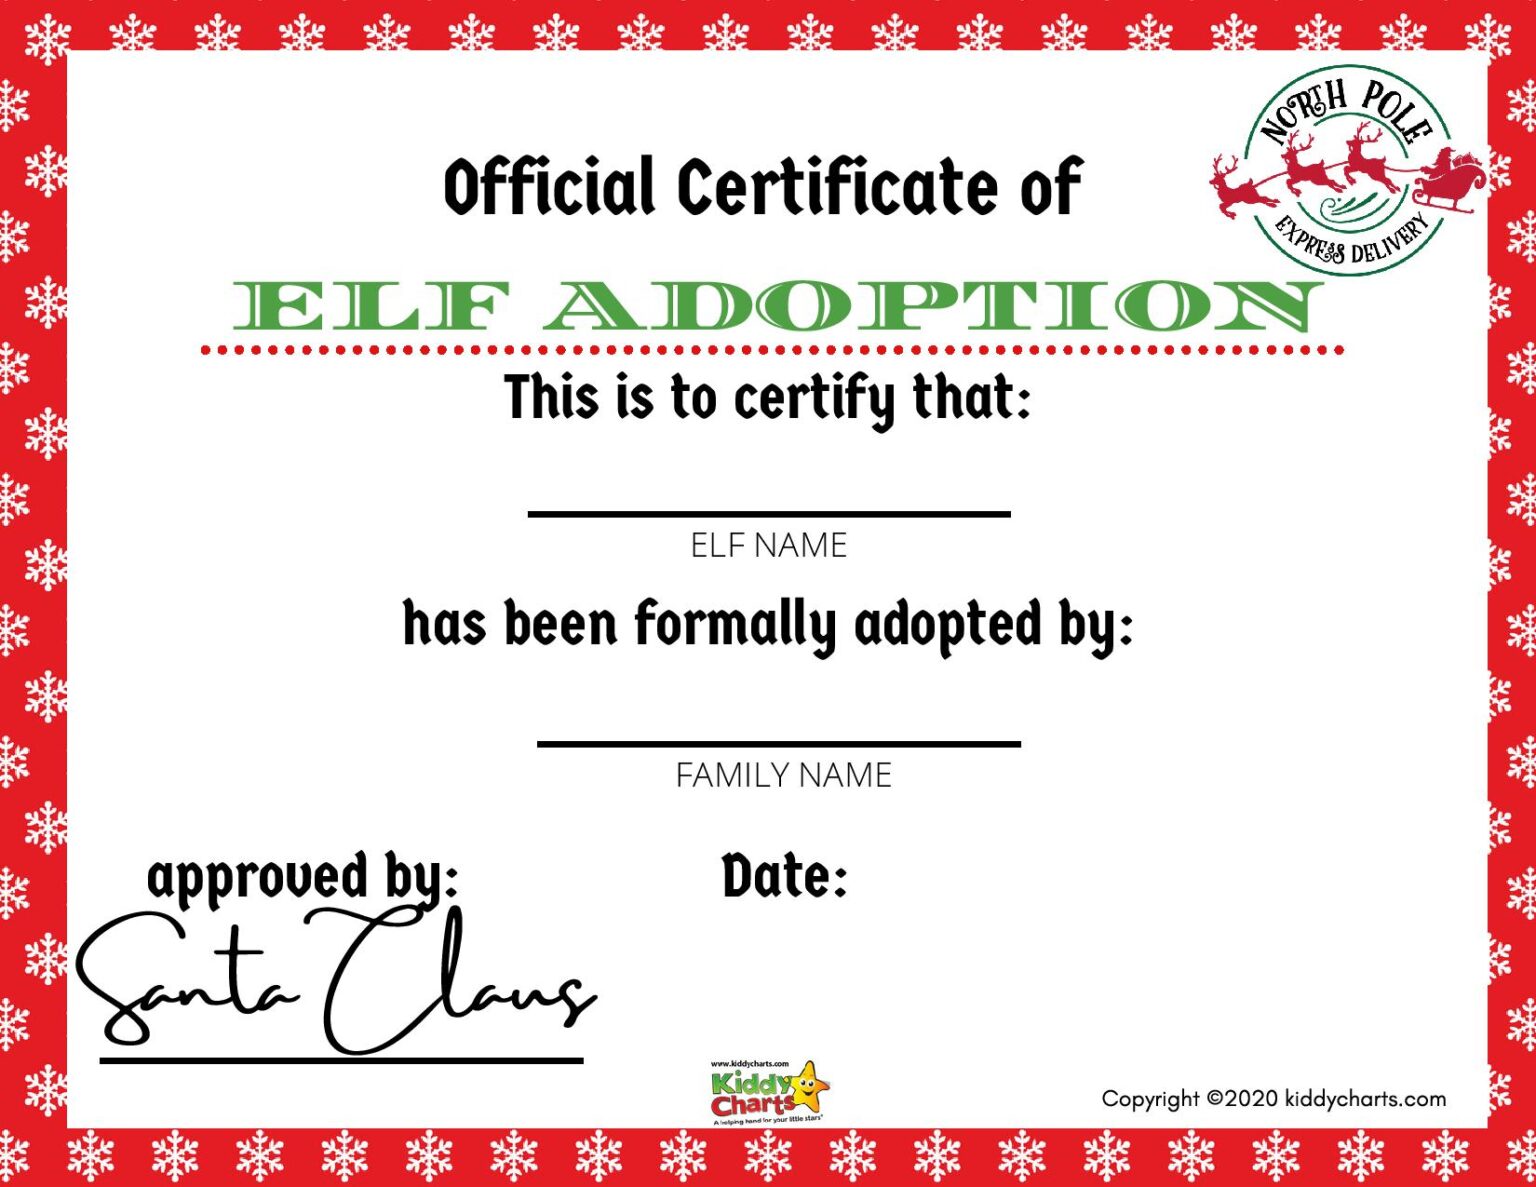 printable-elf-adoption-certificate-kiddycharts